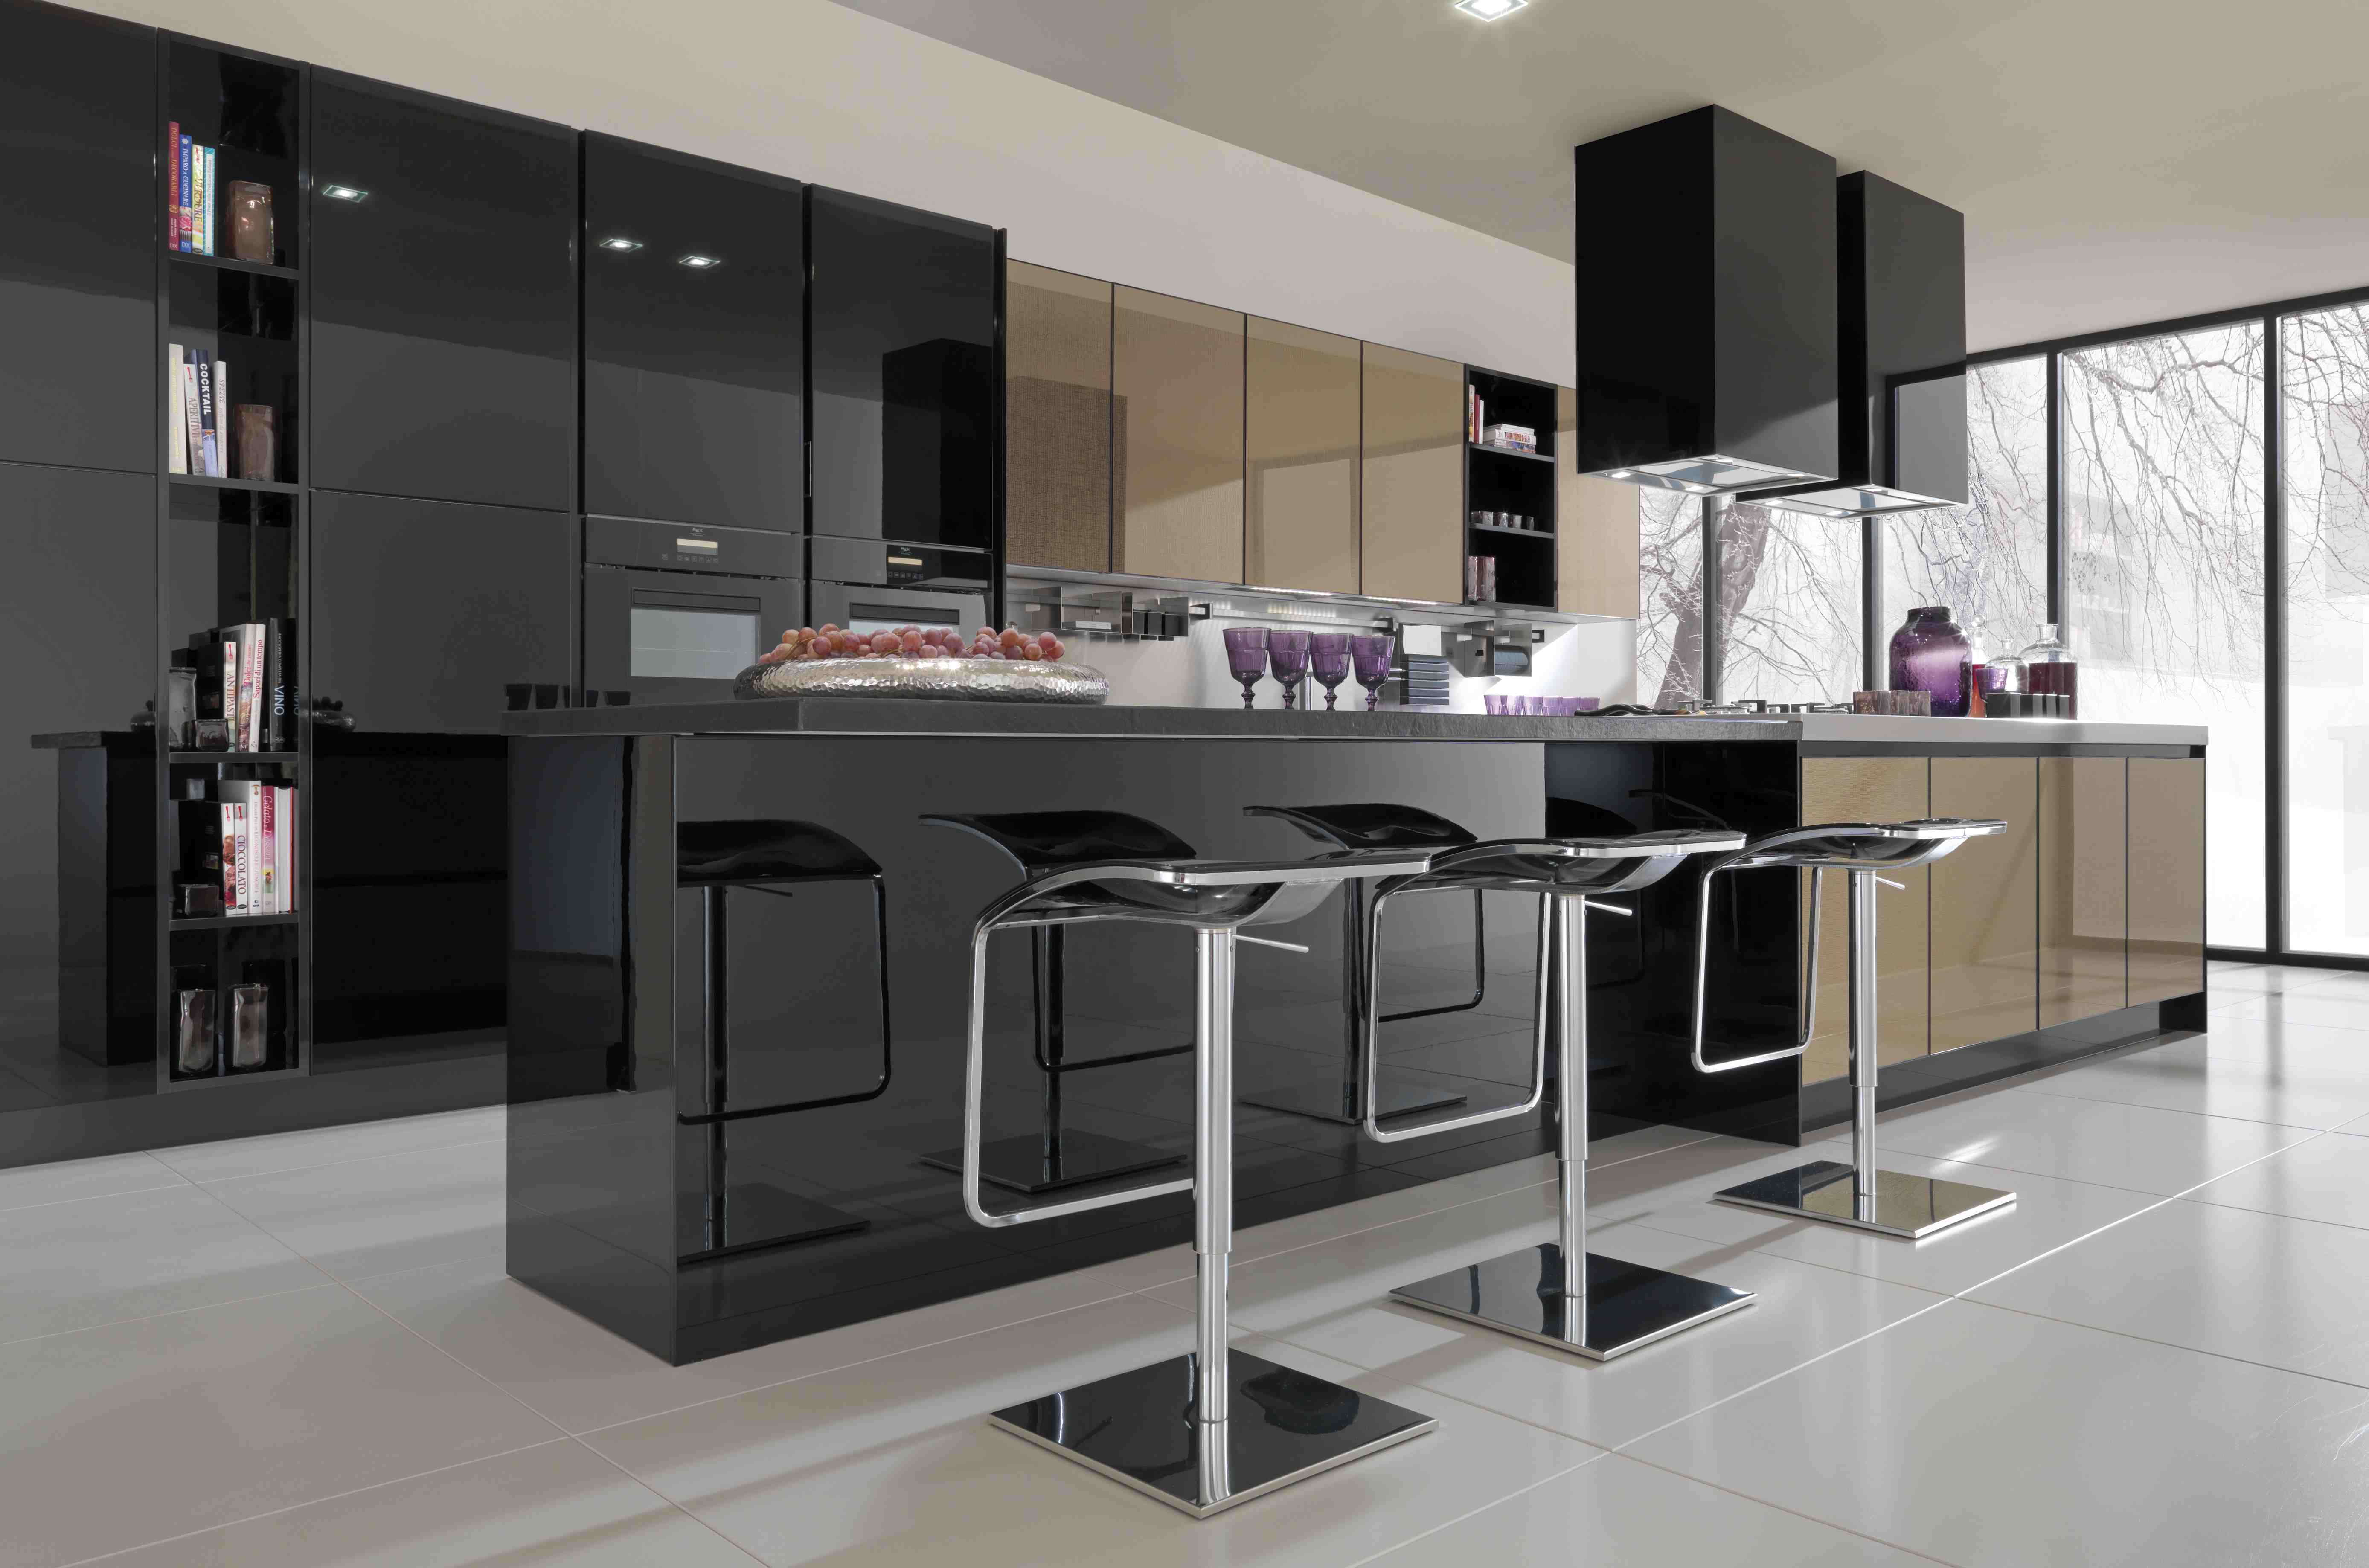 kitchen italian designs kitchens contemporary berloni classy modern interior thinks everyone outside box who shape modular 2021 cozinha source architectureartdesigns